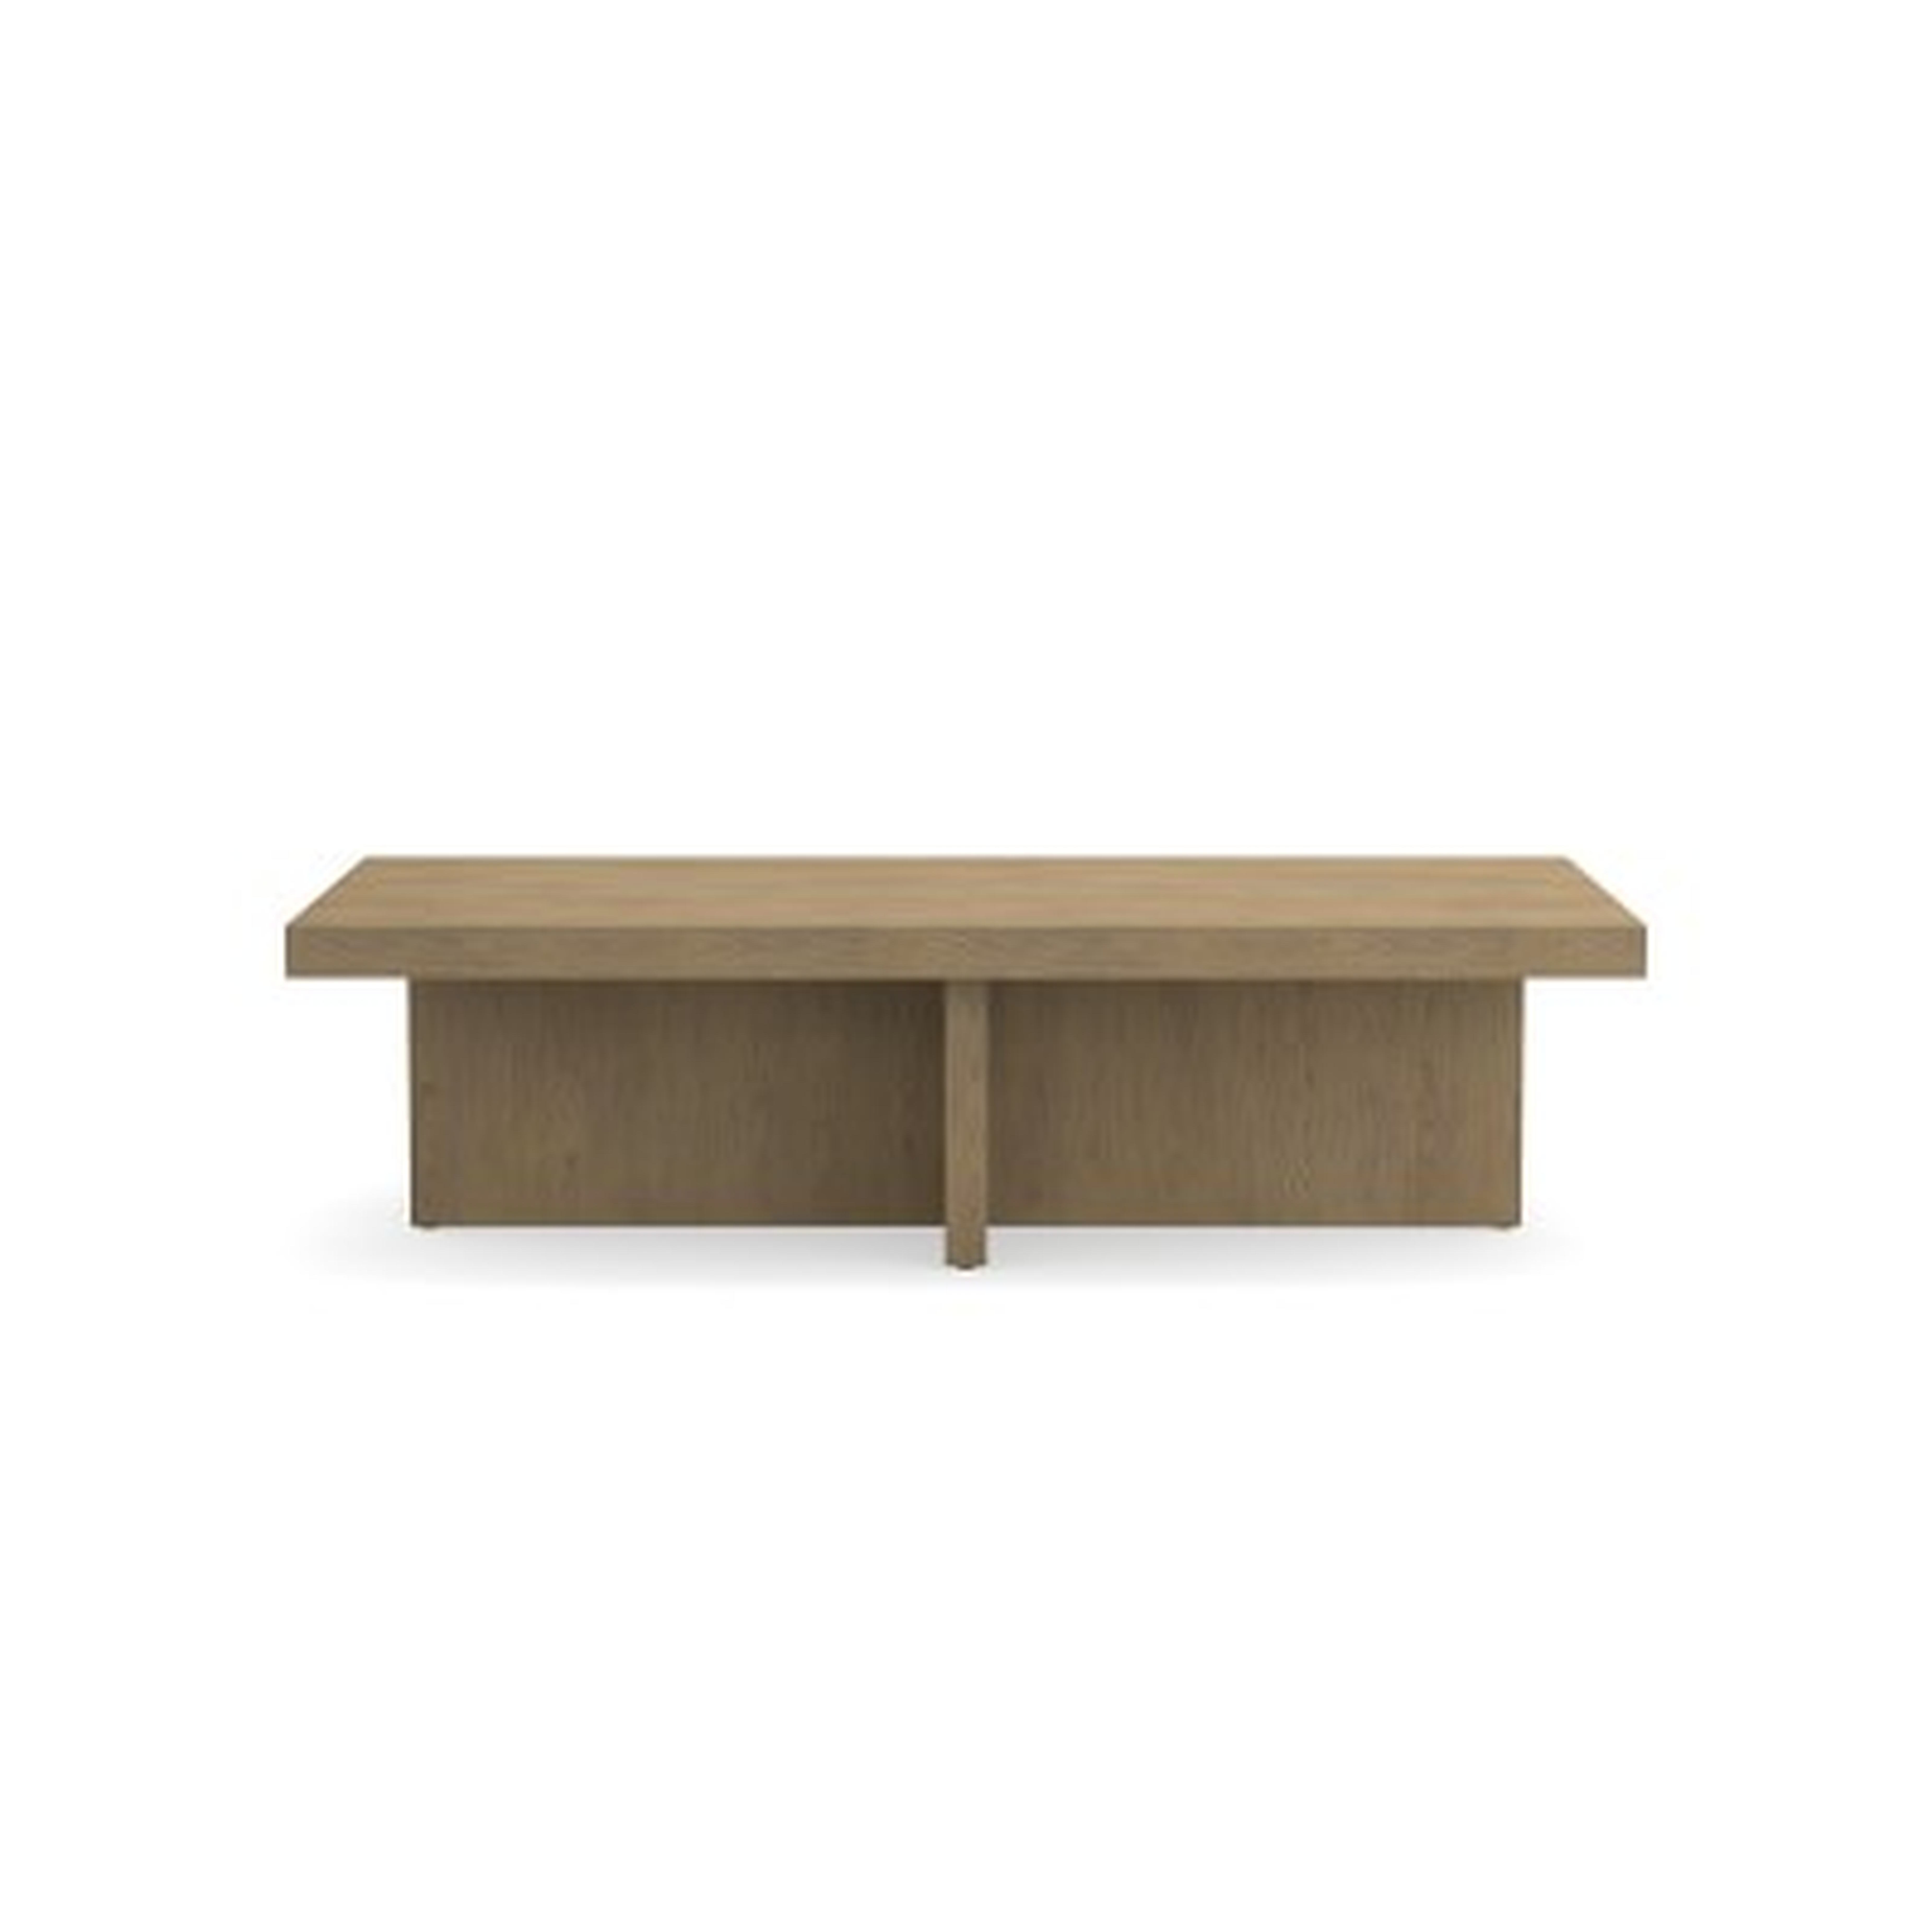 Oak Plank Rectangular Coffee Table, 63", Weathered Oak, Brown - Williams Sonoma